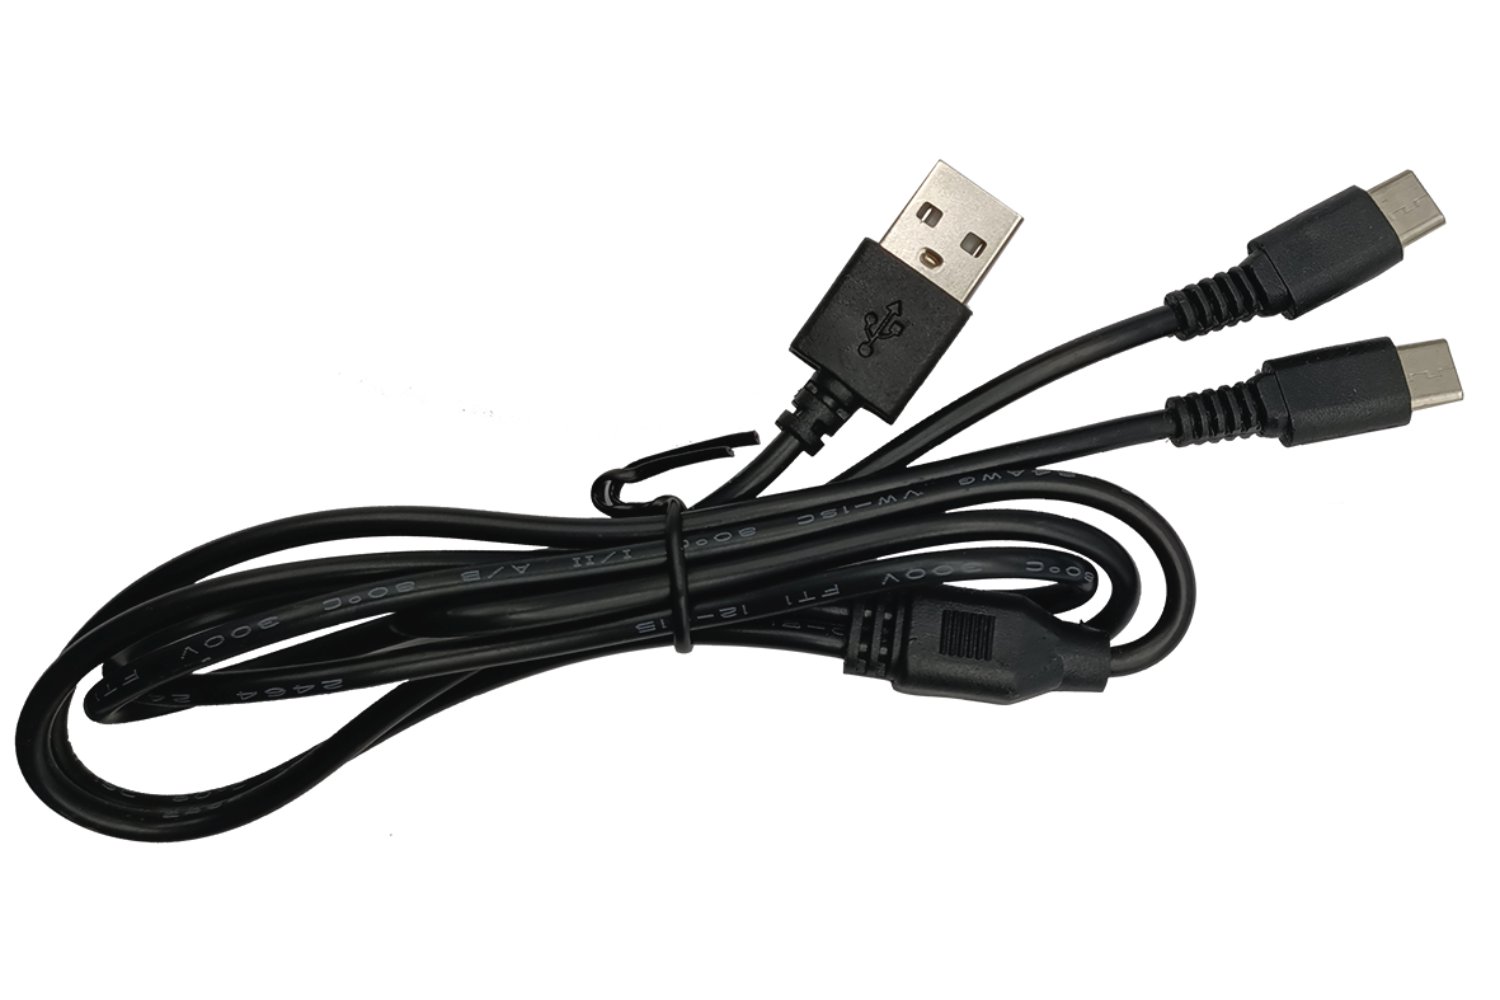 Hevi USB-Ladekabel mit Y-Verteiler (2x USB-C)